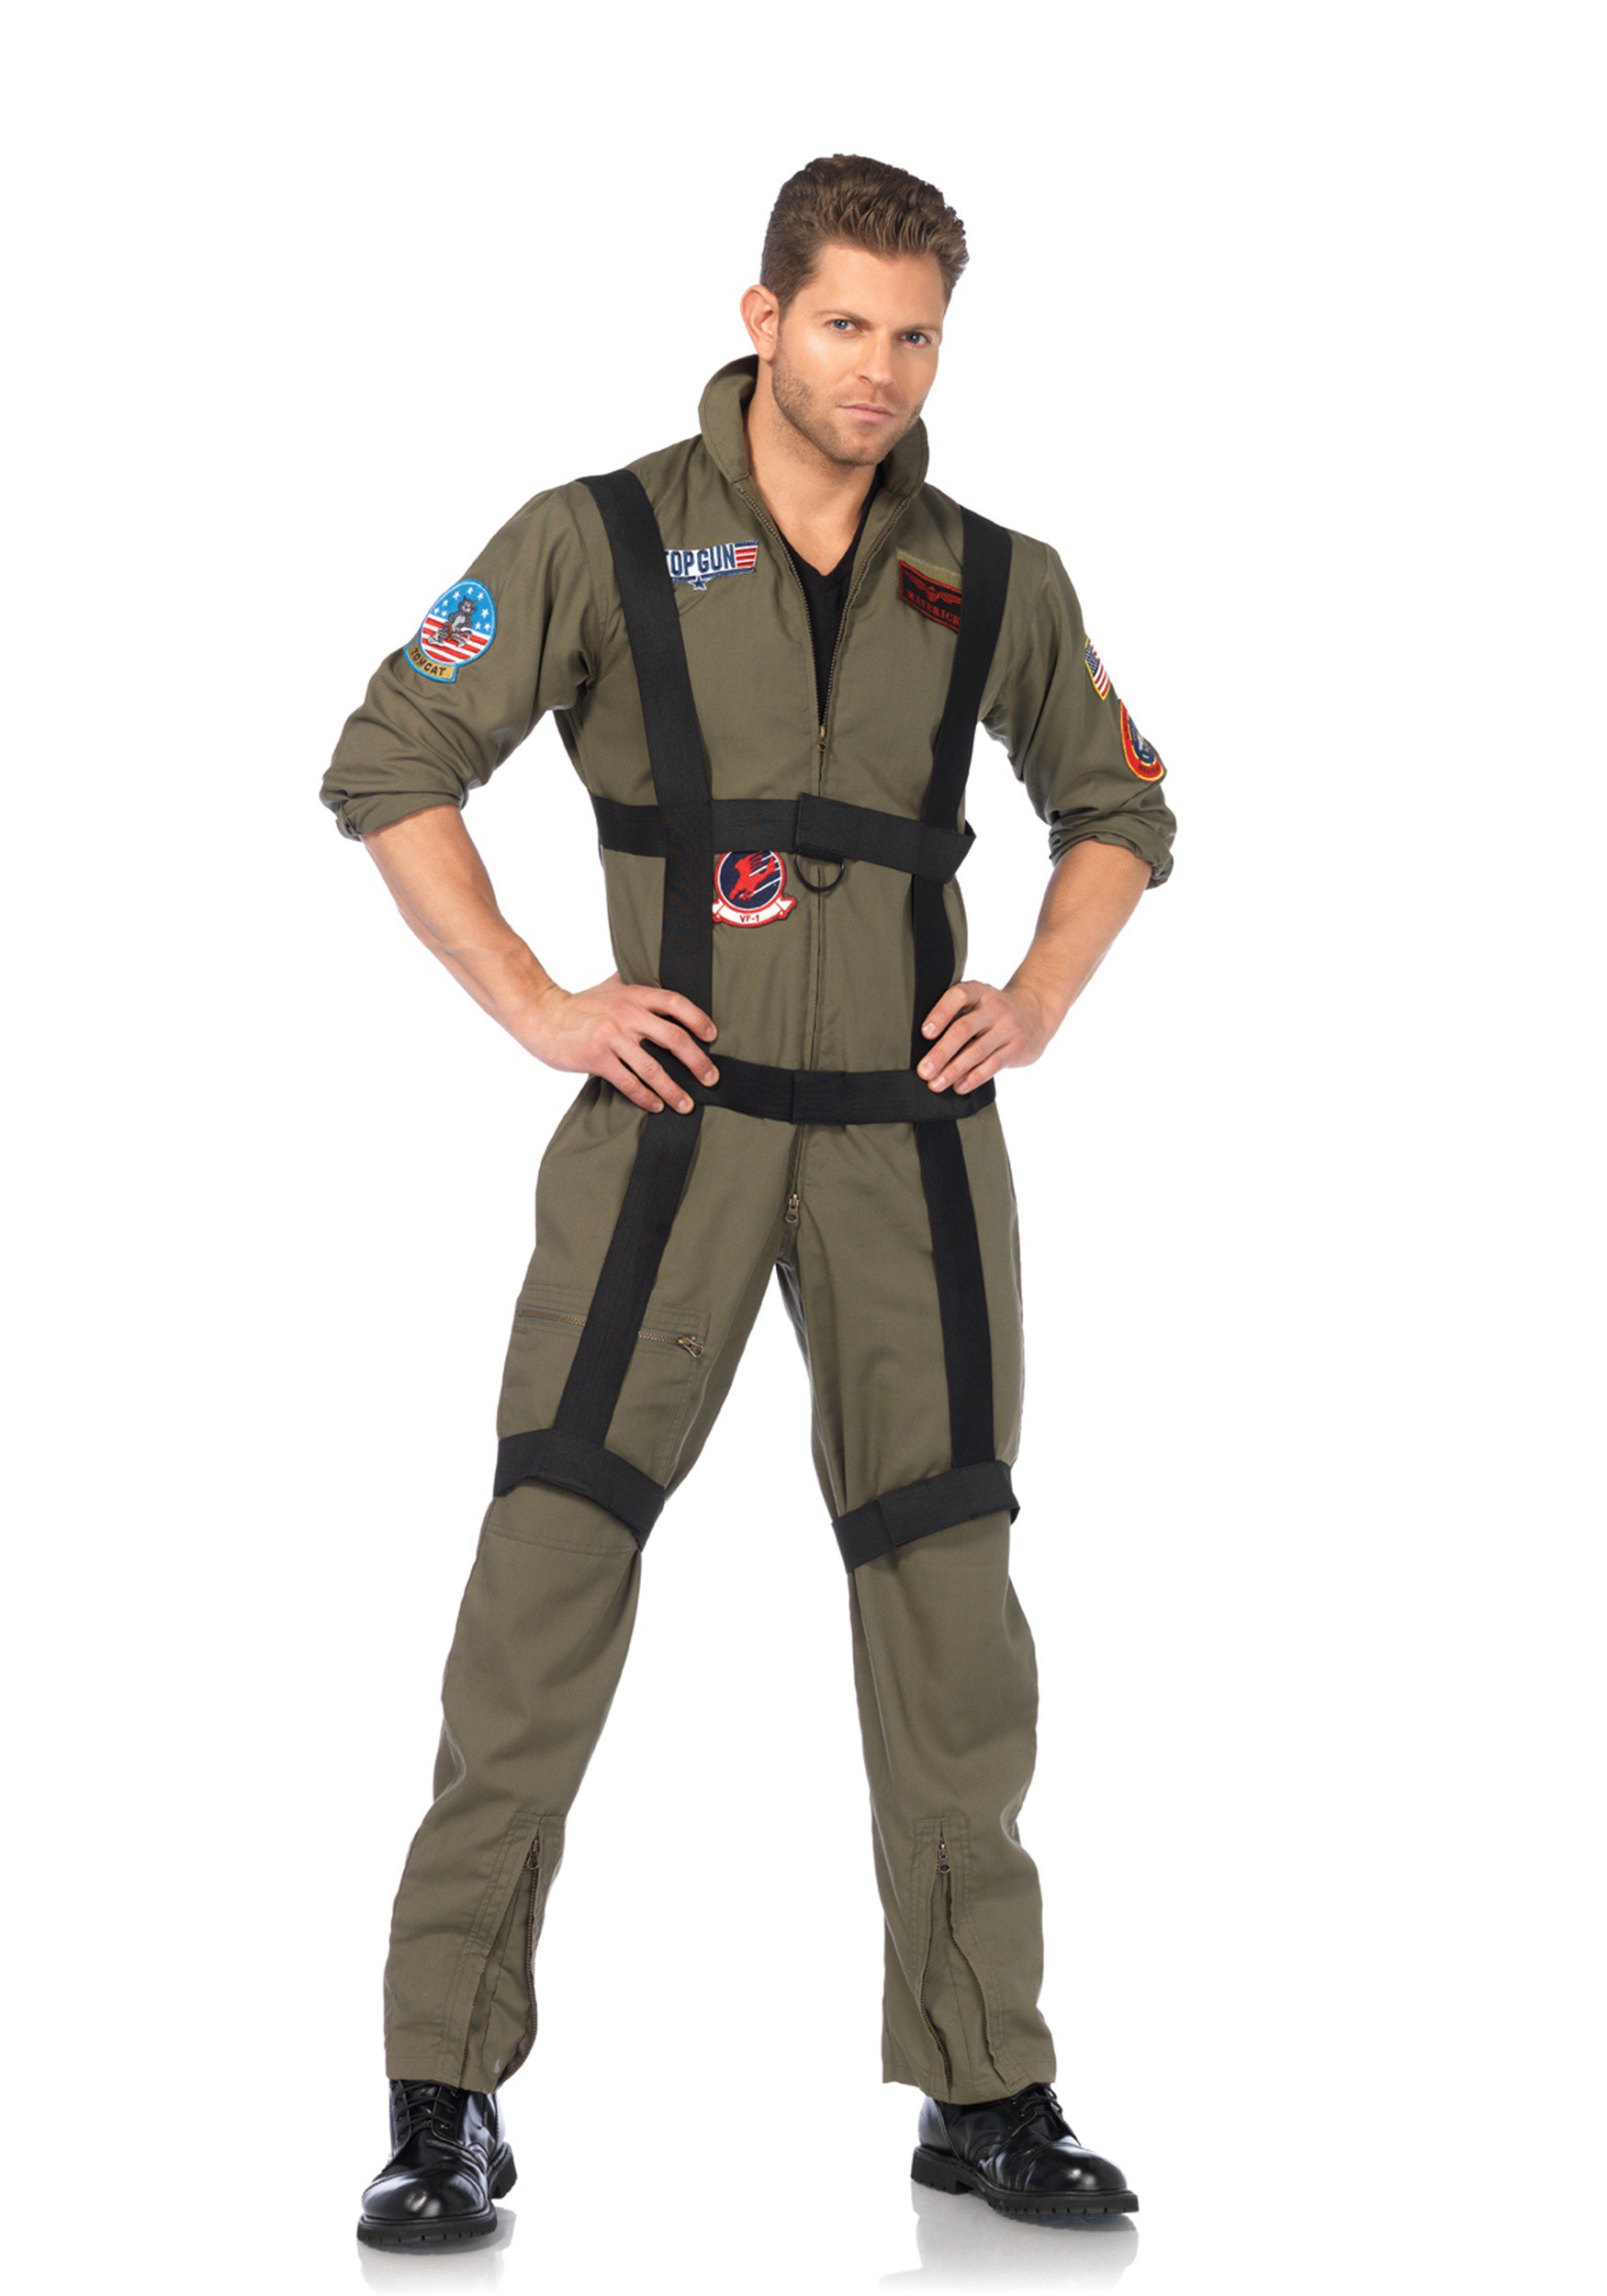 Men’s Top Gun Jumpsuit Costume with Harness